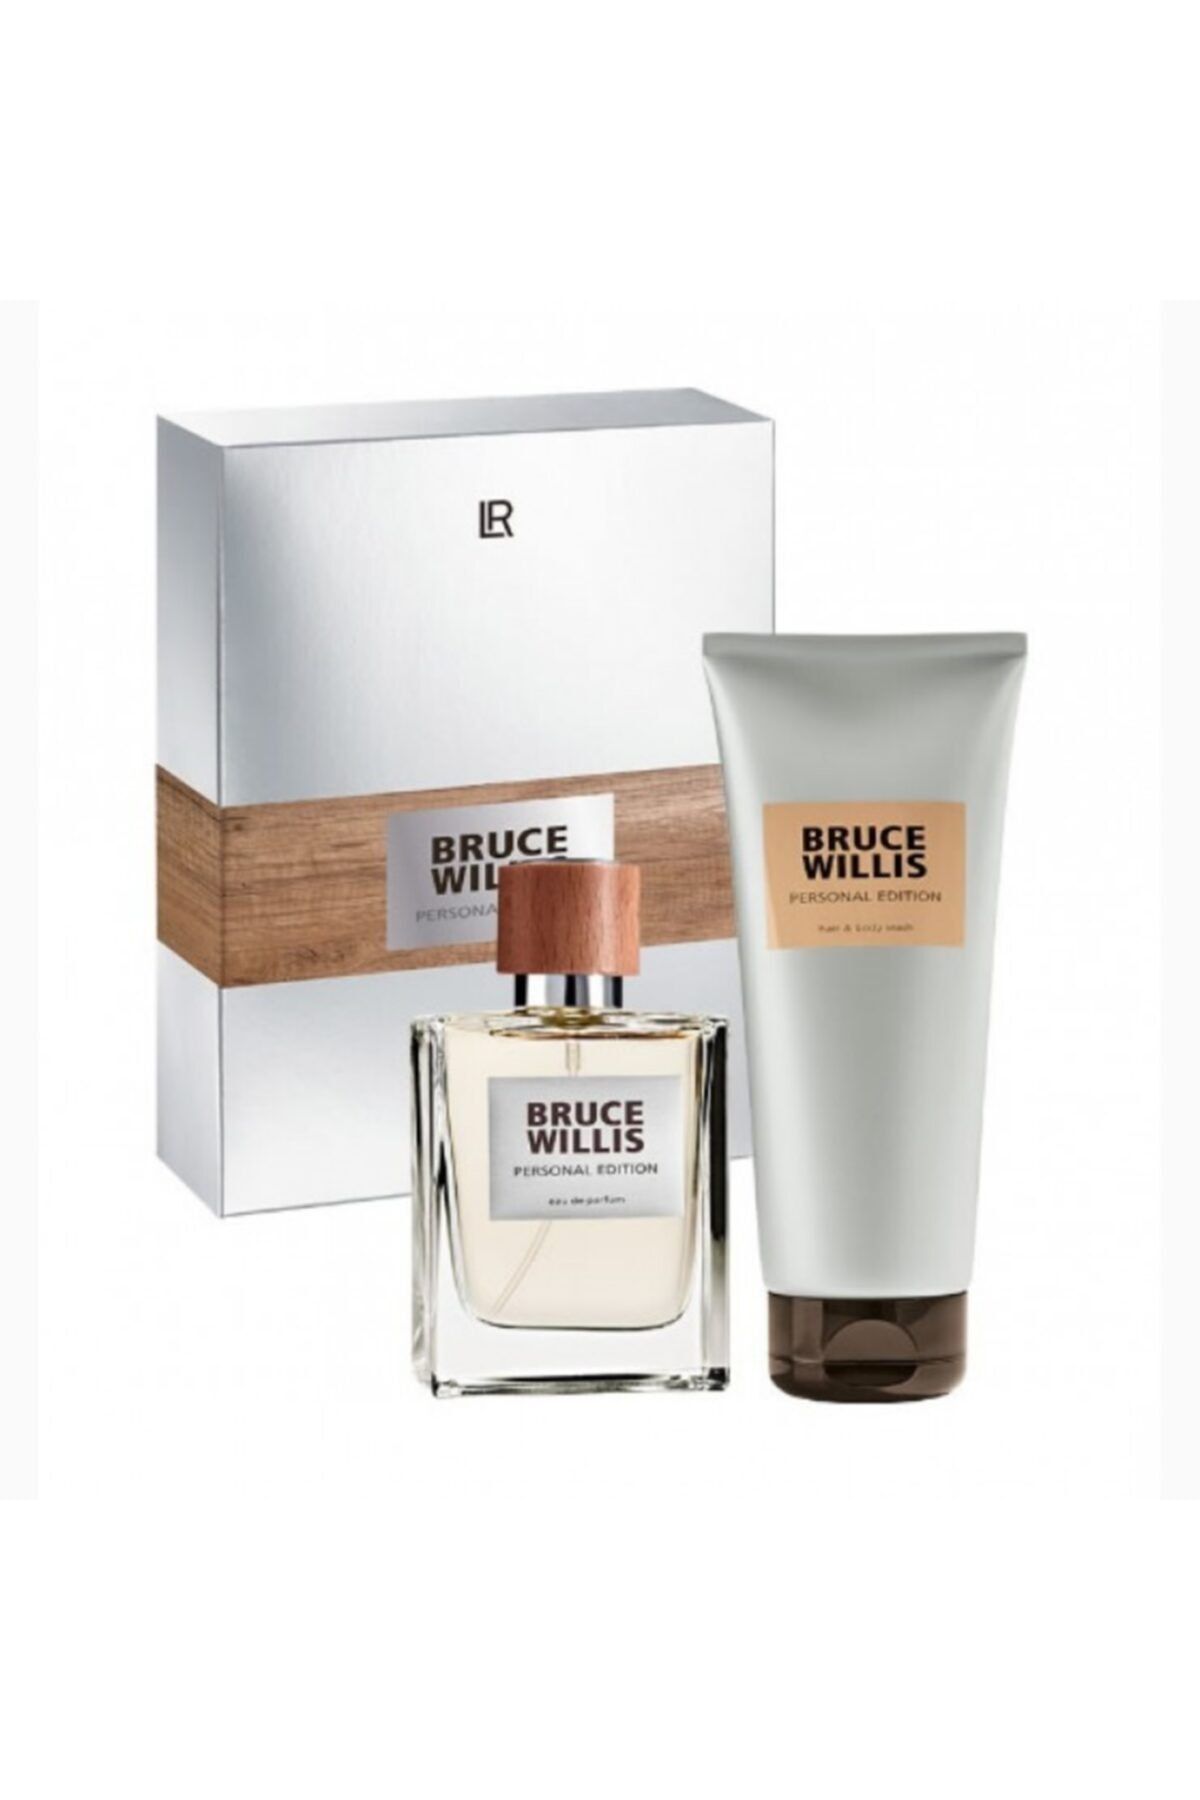 LR Bruce Willis Personal Edition Edp 50 ml Erkek Parfüm Saç Vücut Şampuanı Set